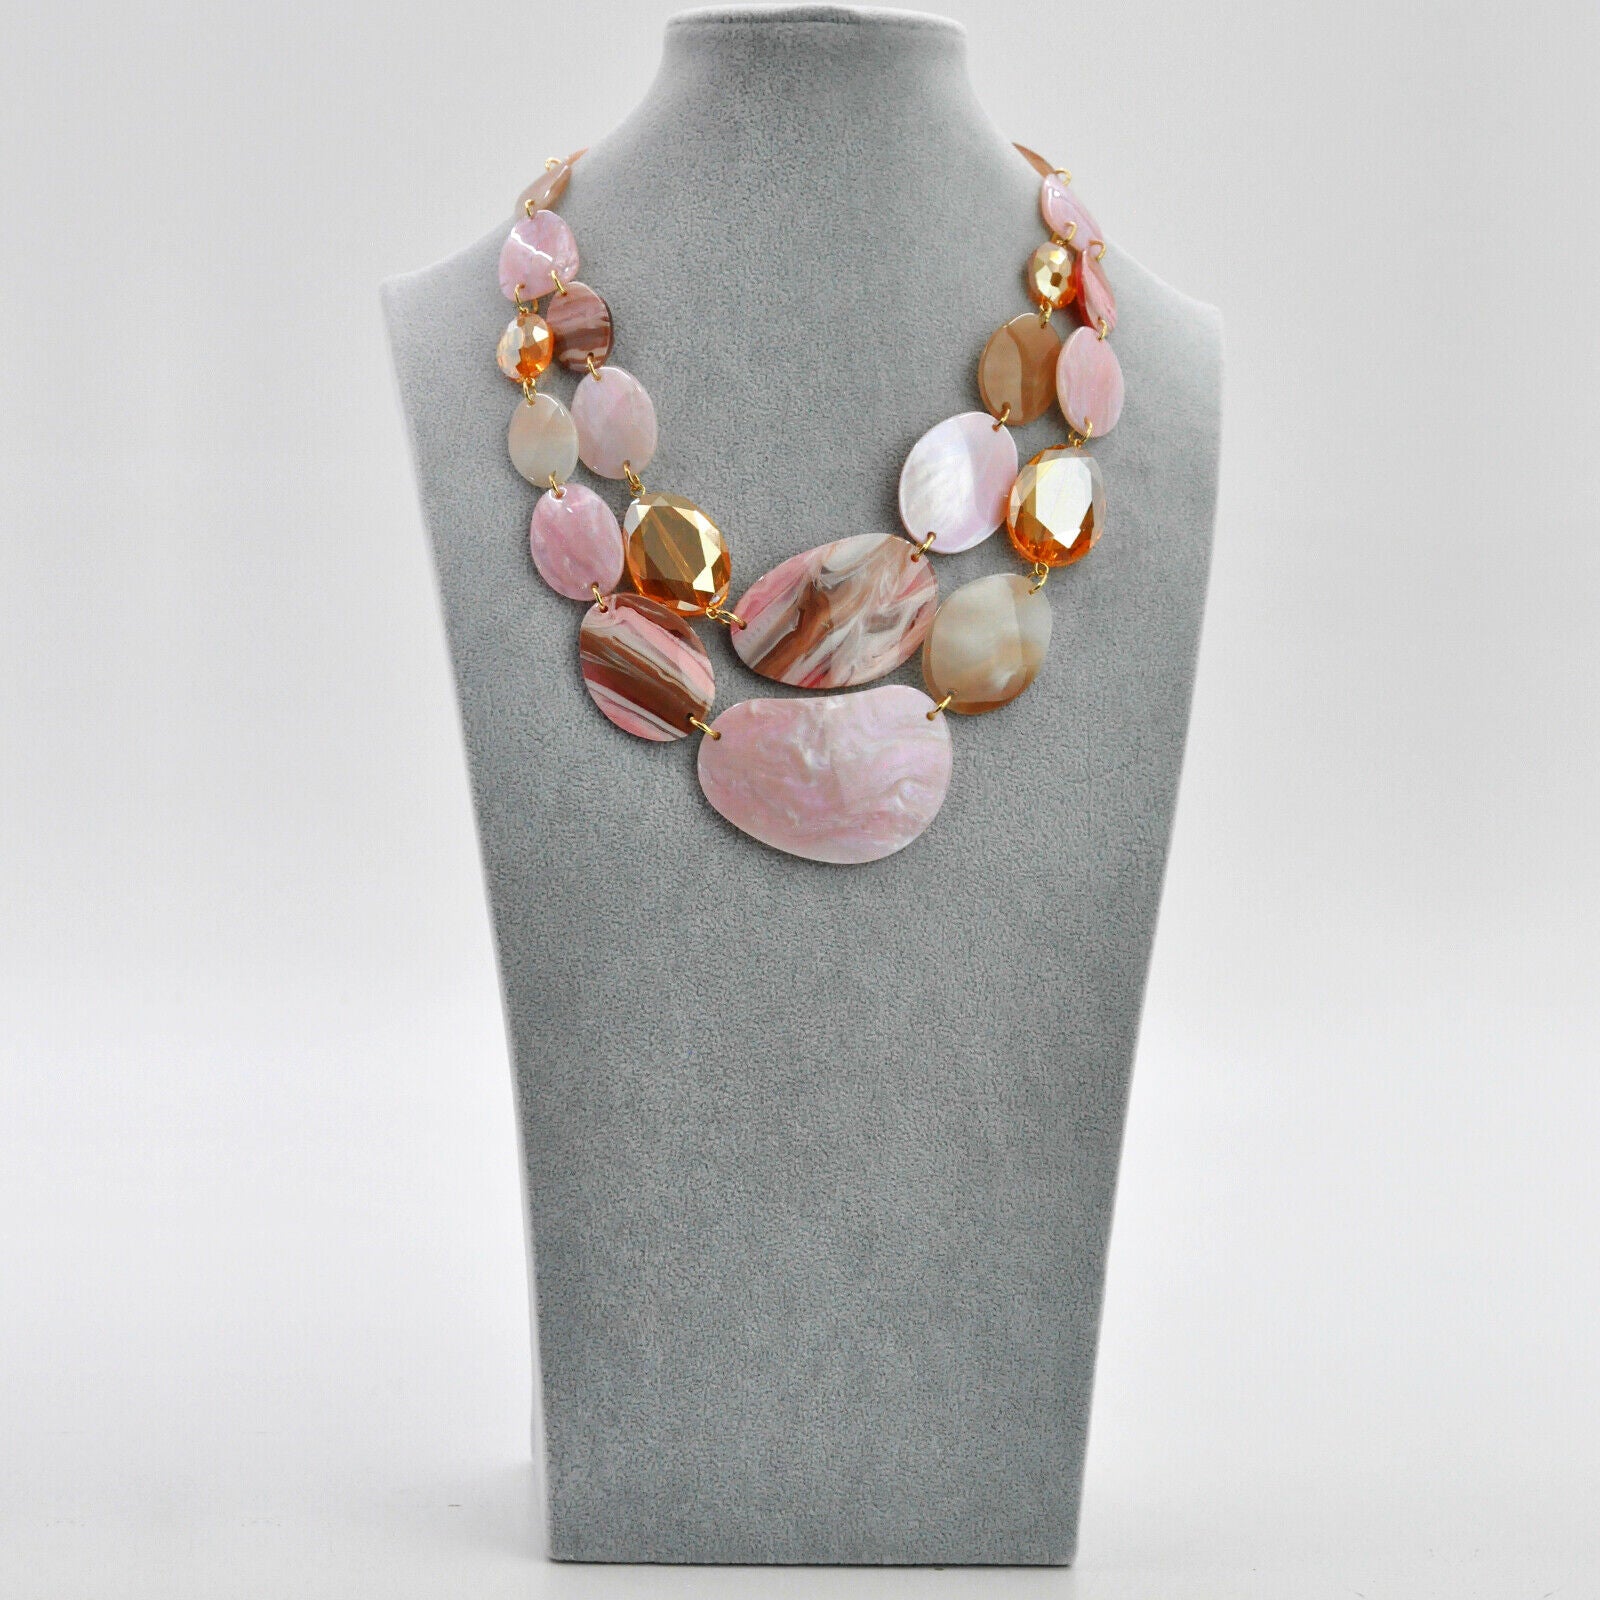 Collana girocollo donna resina pietre dure rosa cristalli boemia elegante nuova